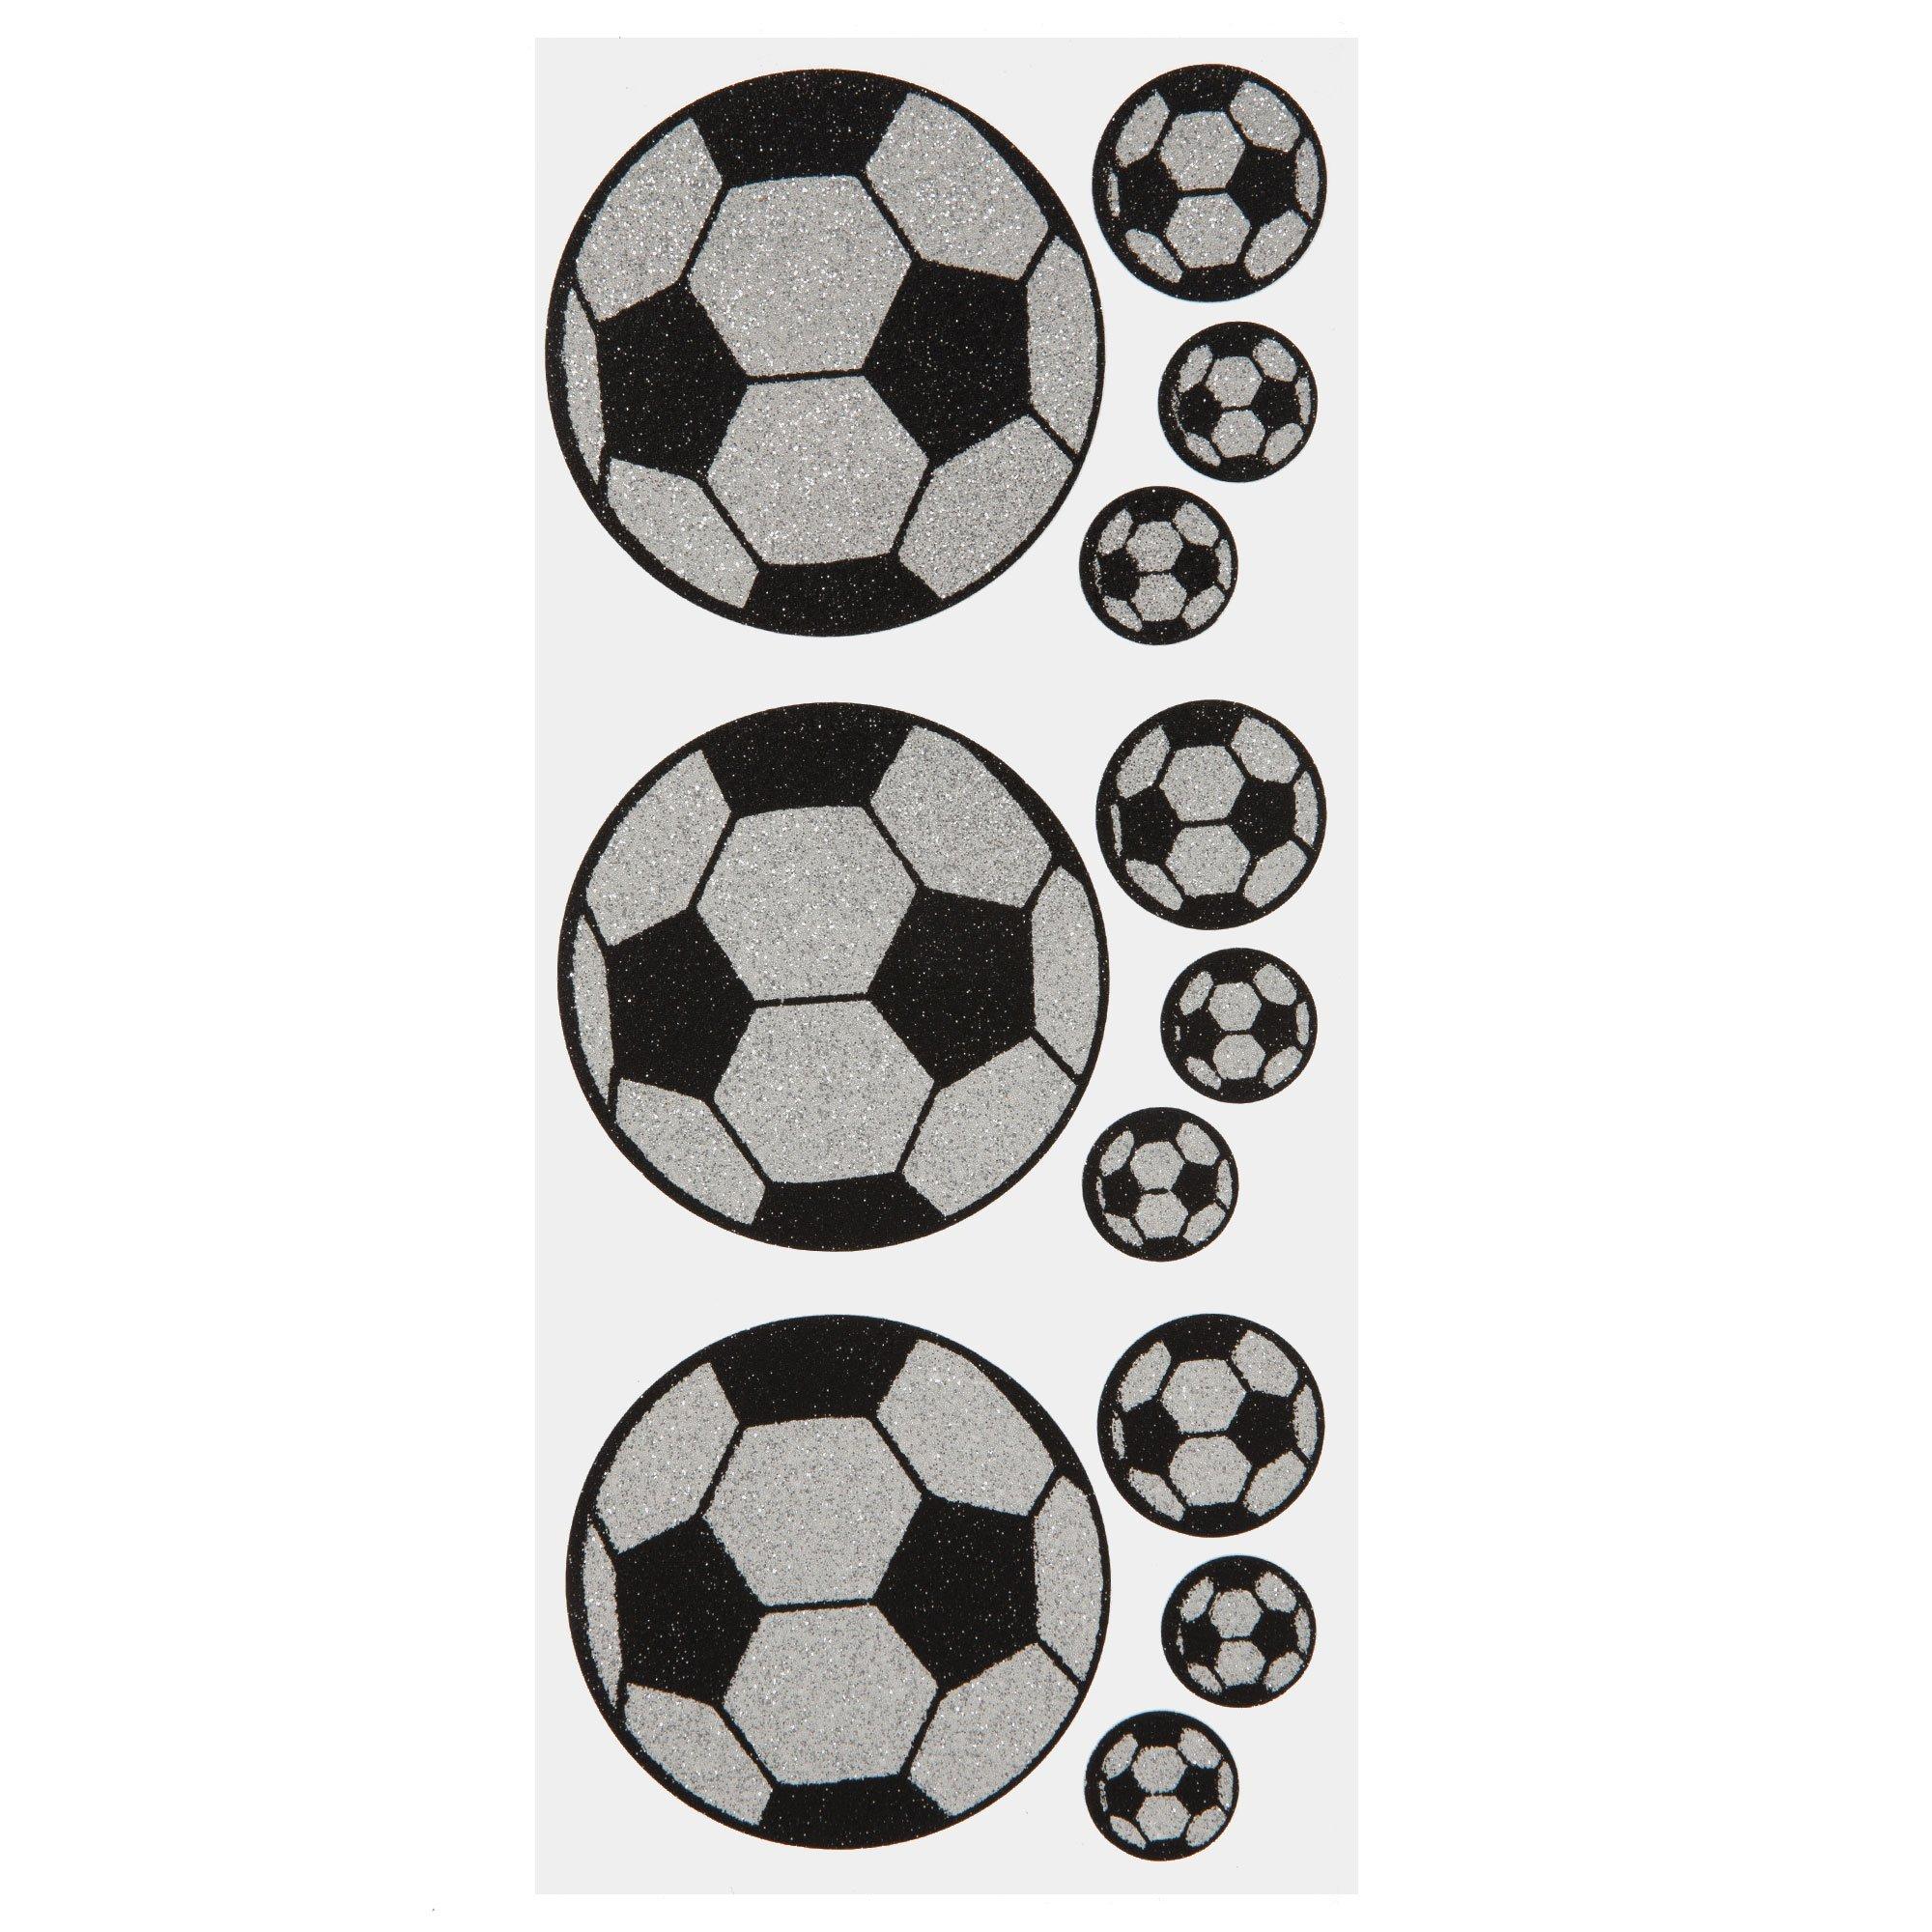  The Paper Studio Stickabilities Soccer Cardstock Stickers,  149500, 17 pcs